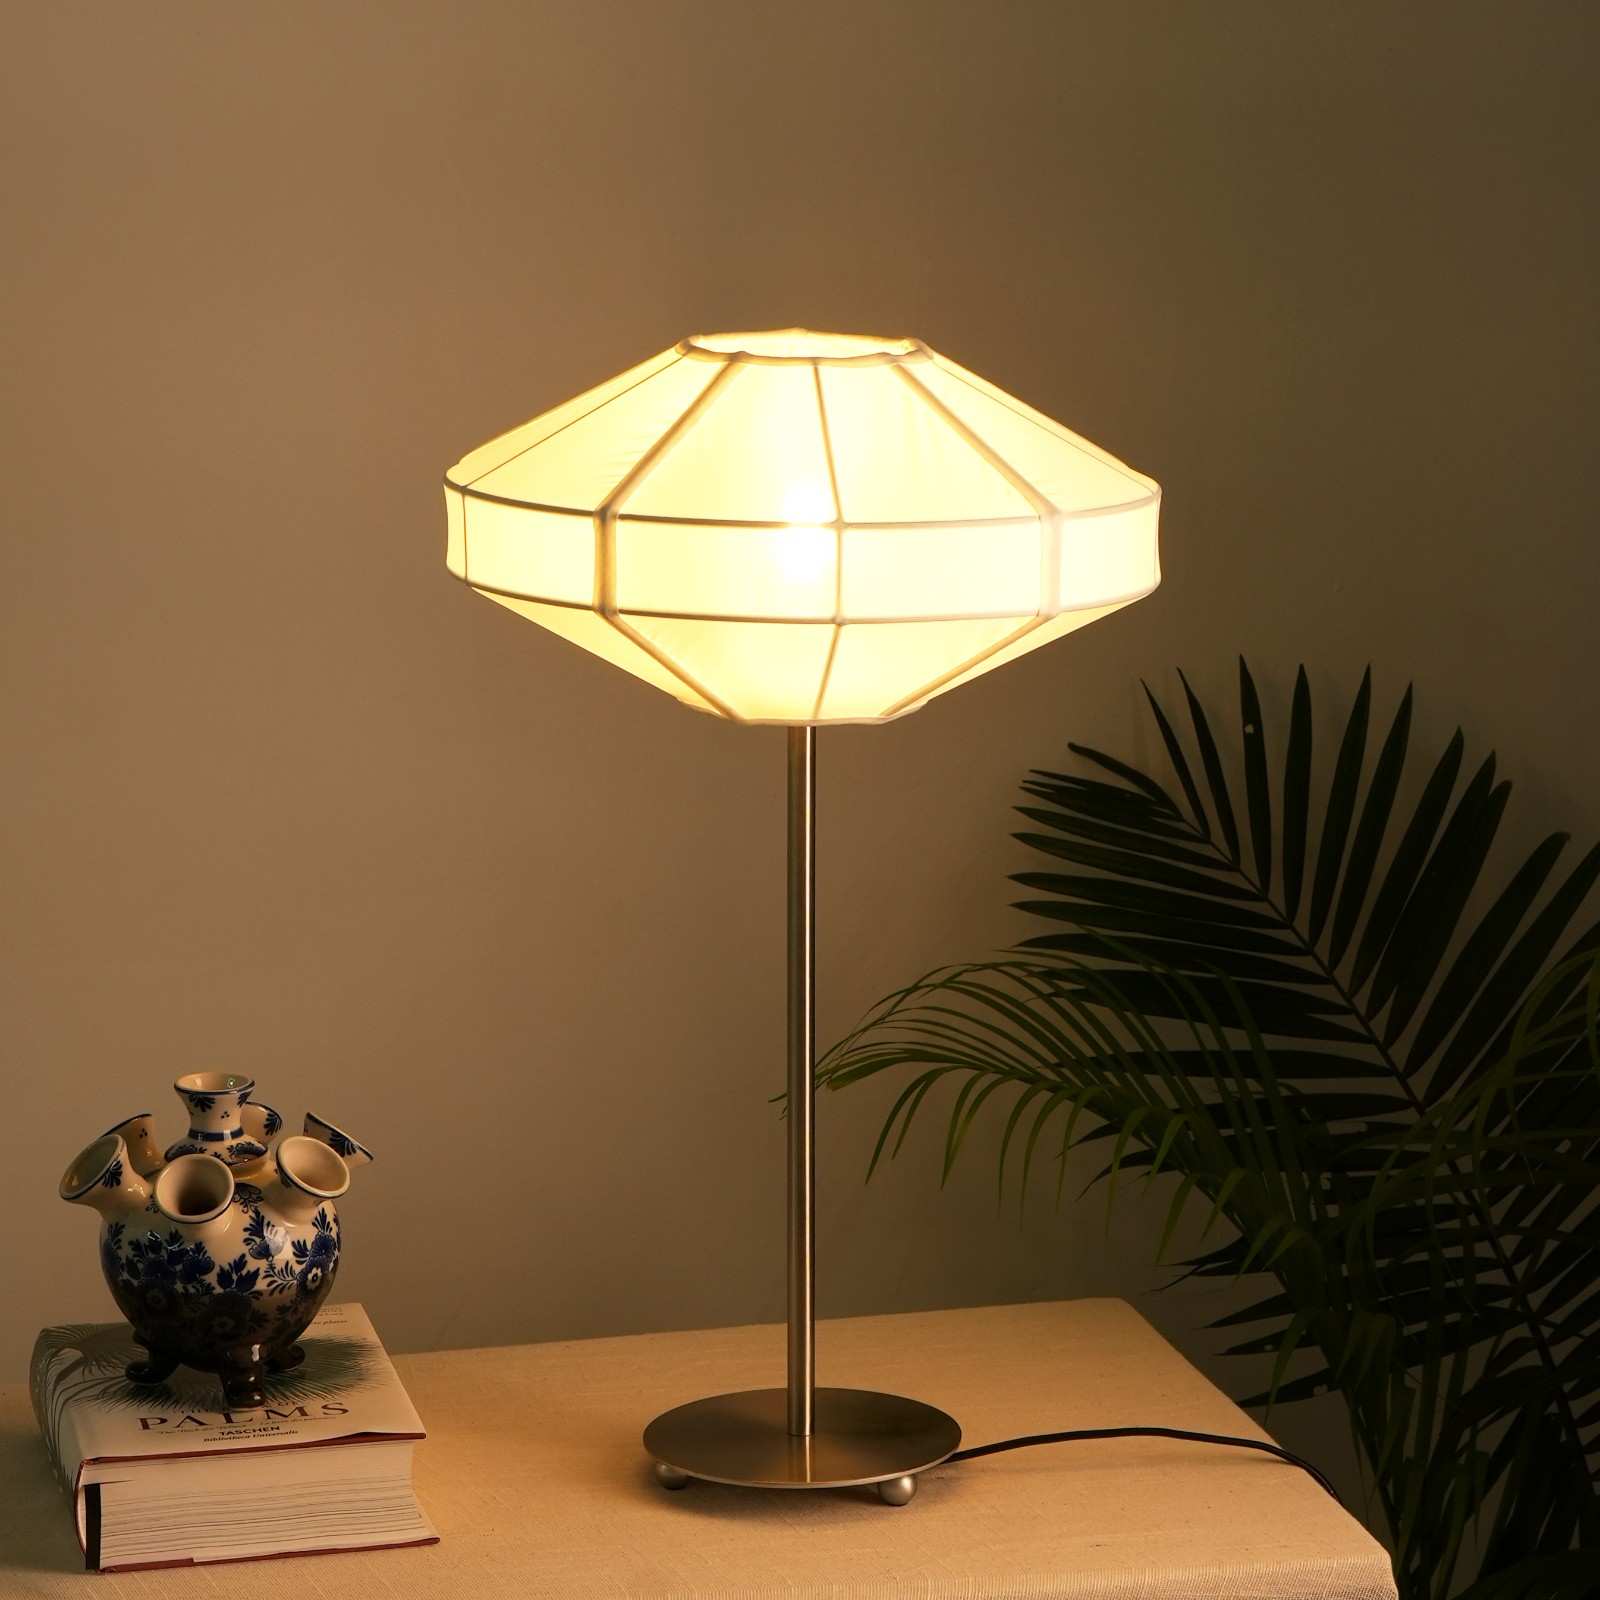 Luxe Collection - Stockholm Lamp  - Premium Chiffon Fabric, Metallic Spacer, Soft Warm Glow, Mood Enhancement Lighting